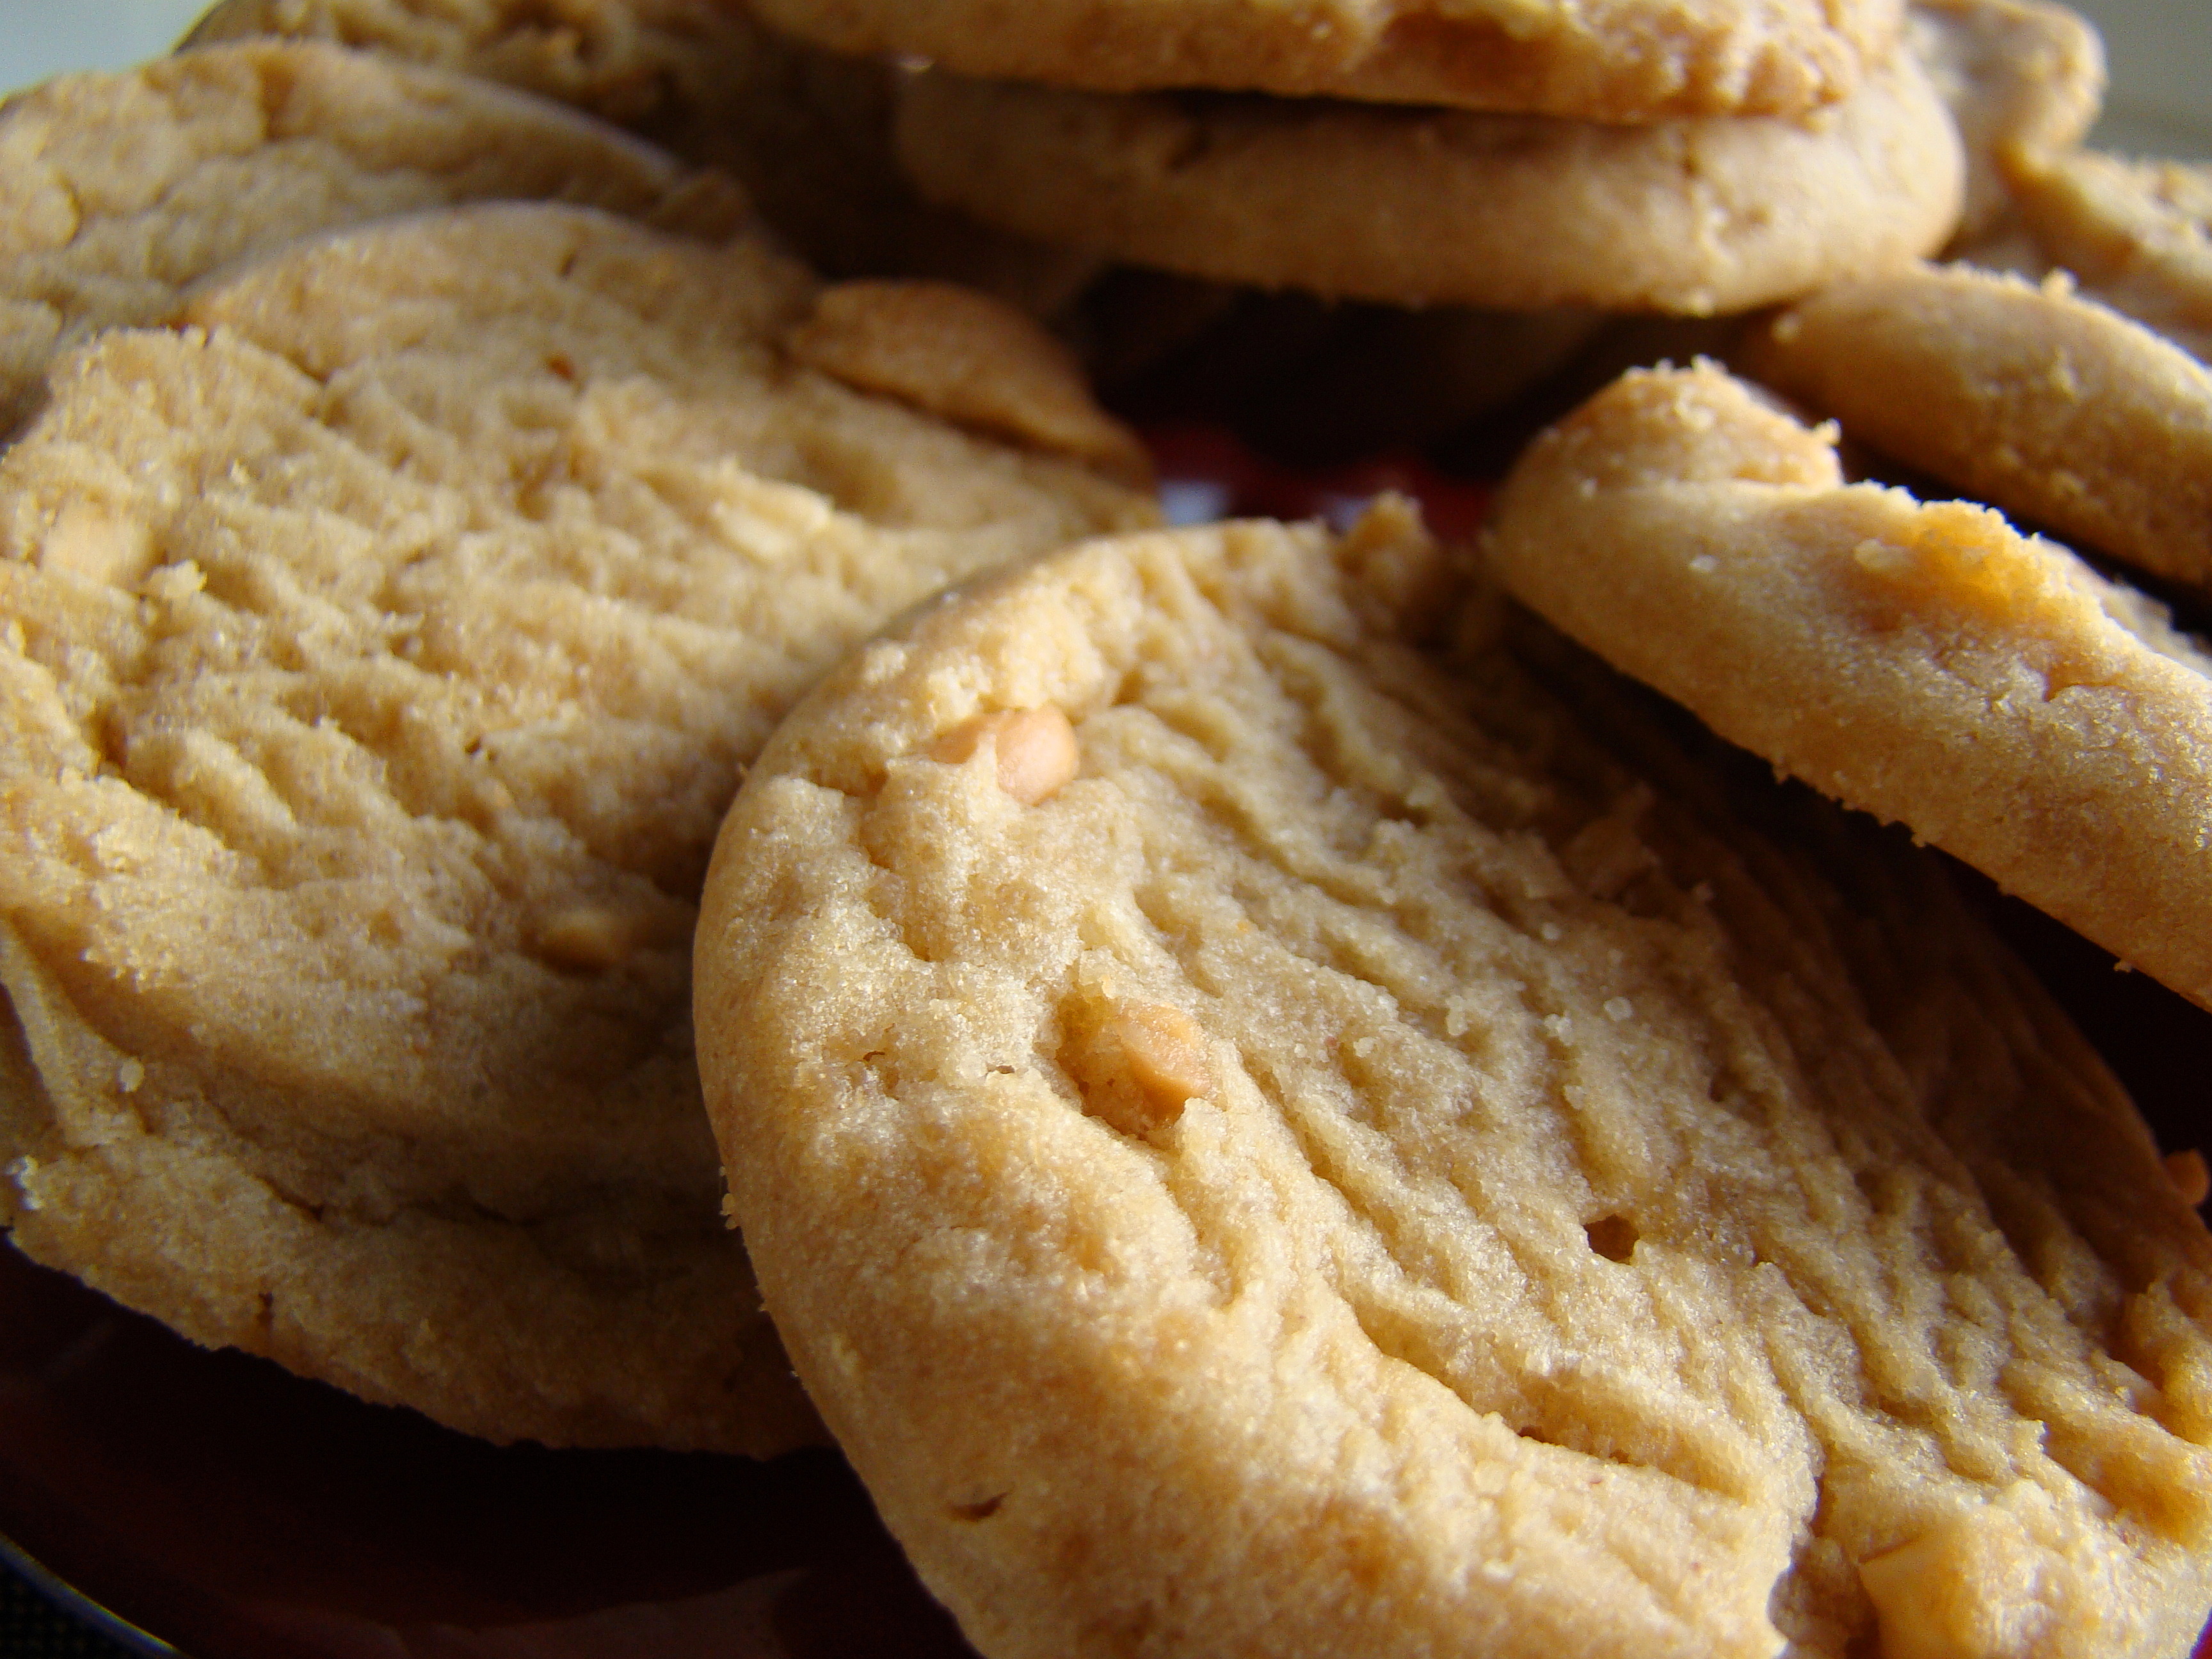 File:Peanut butter cookies, September 2009.jpg - Wikimedia Commons